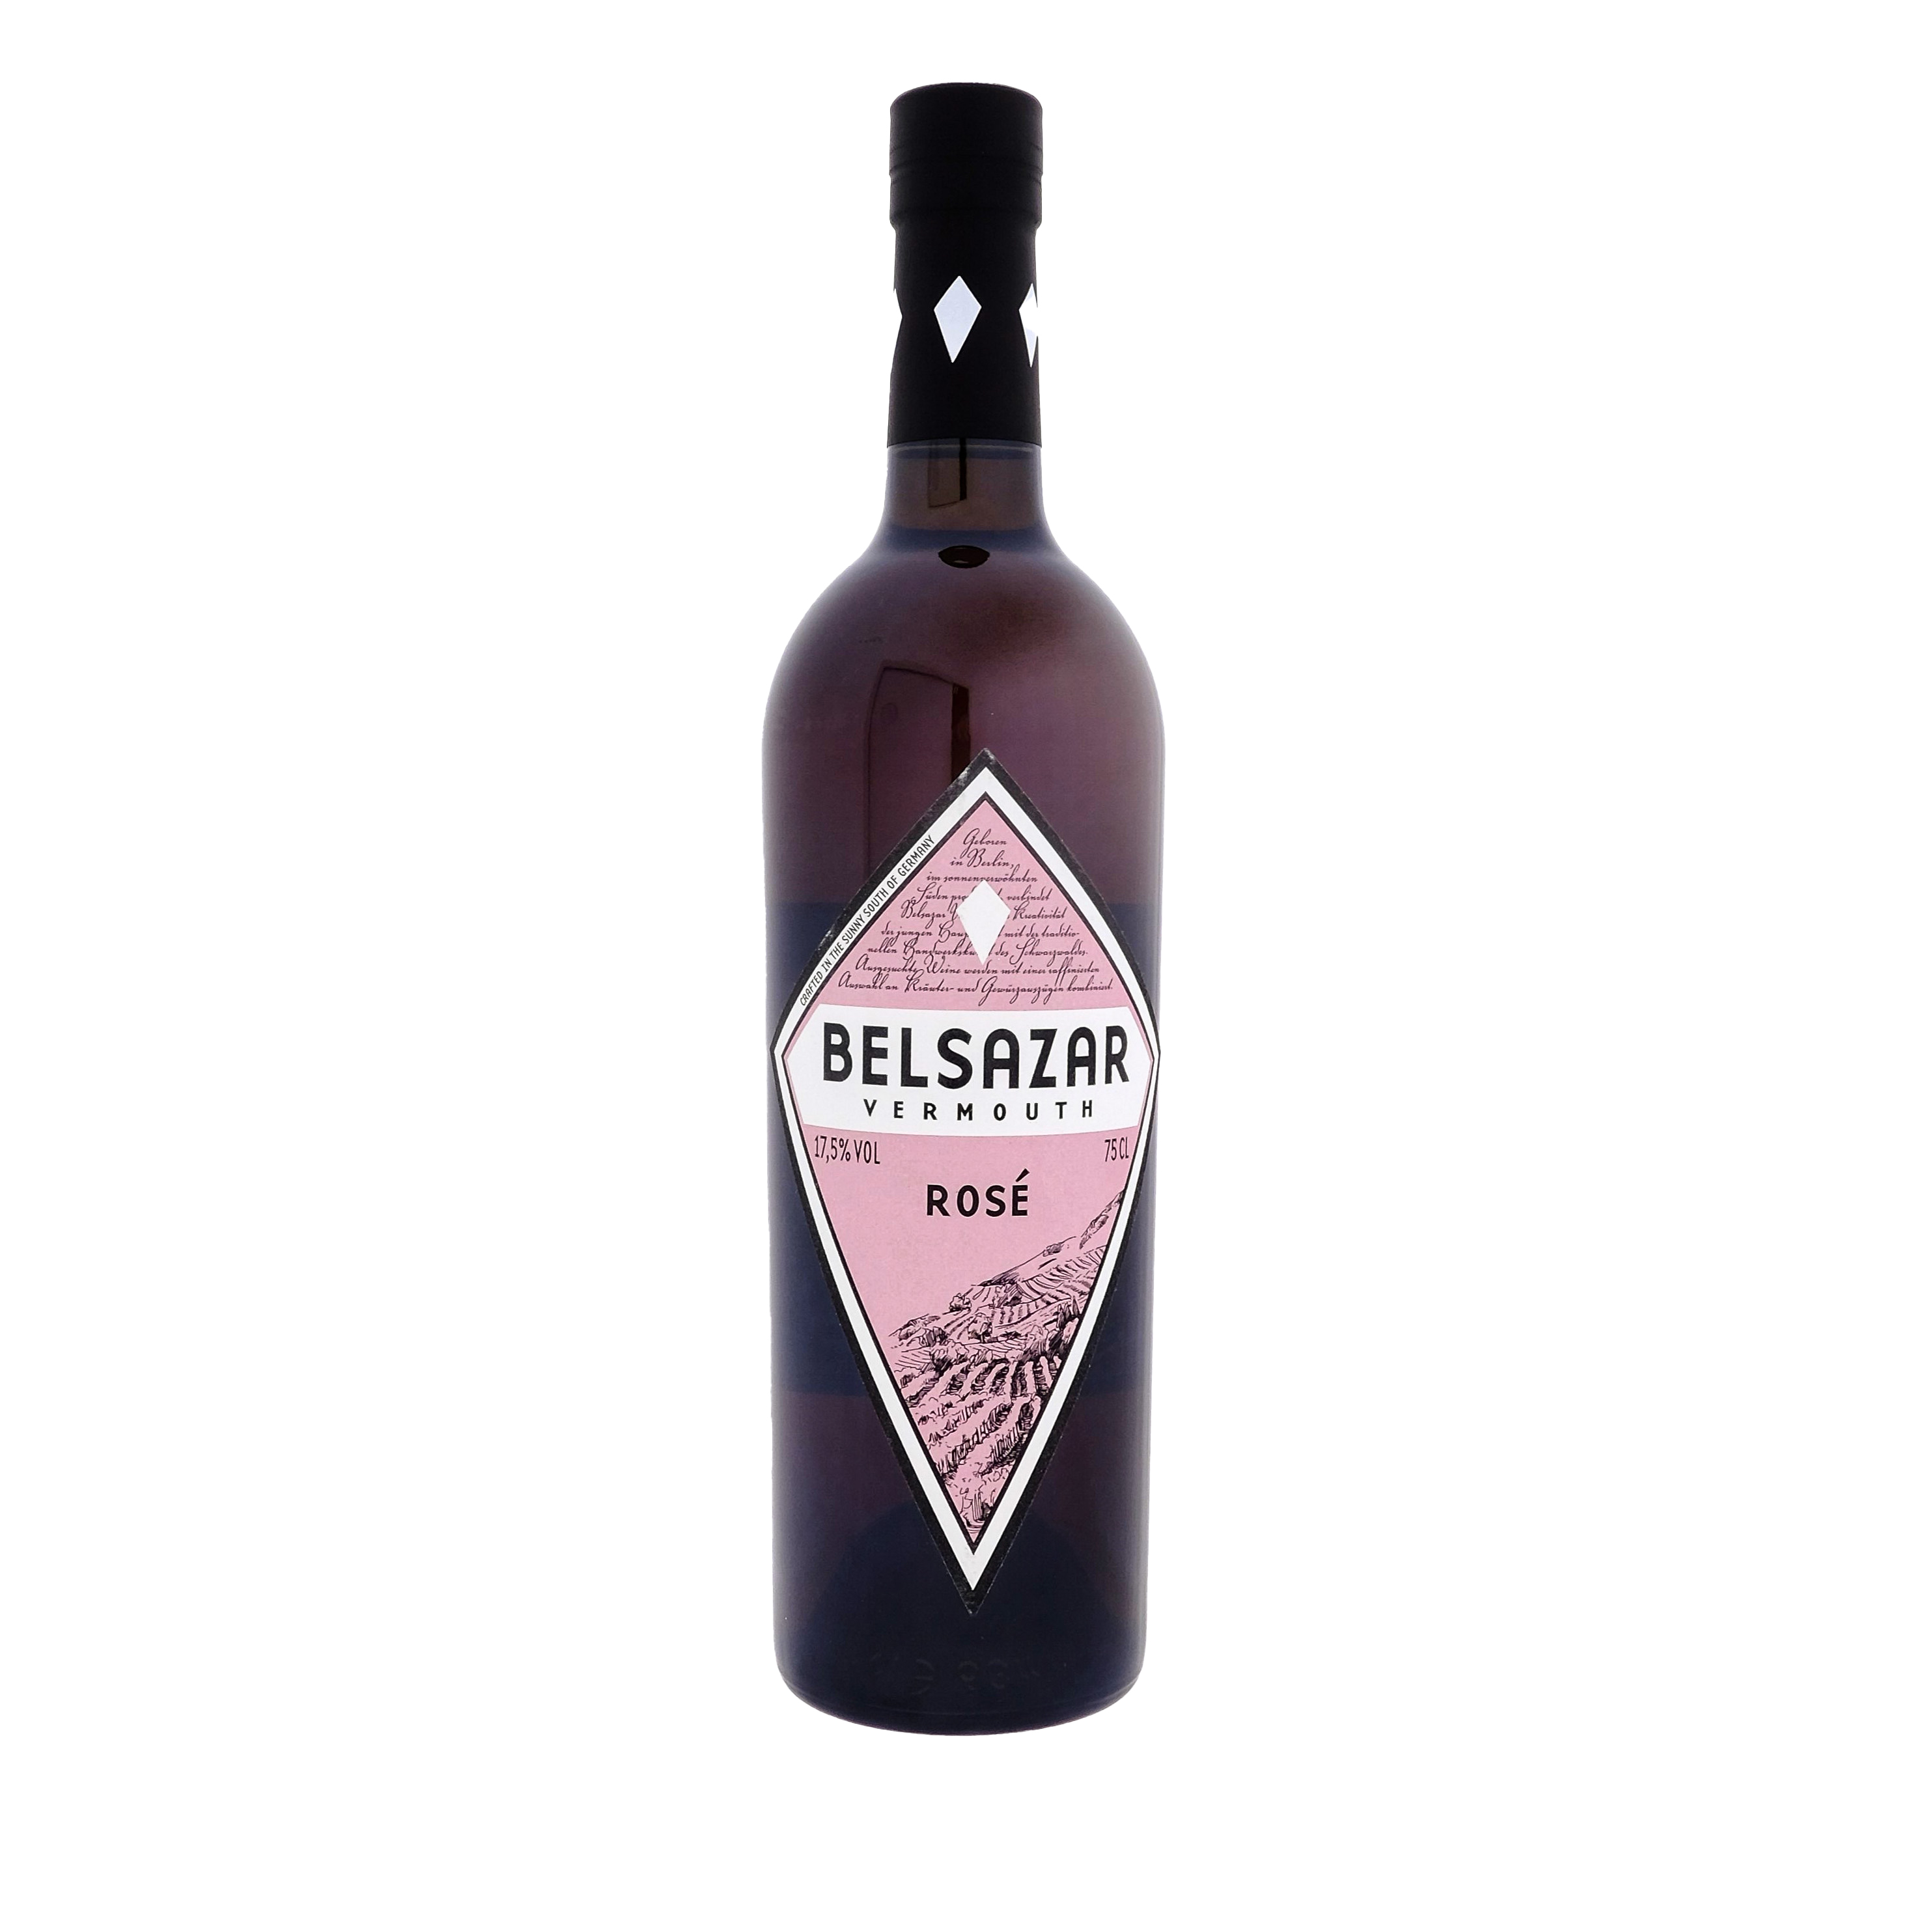 67685 Belsazar rose vermouth 0,75ltr